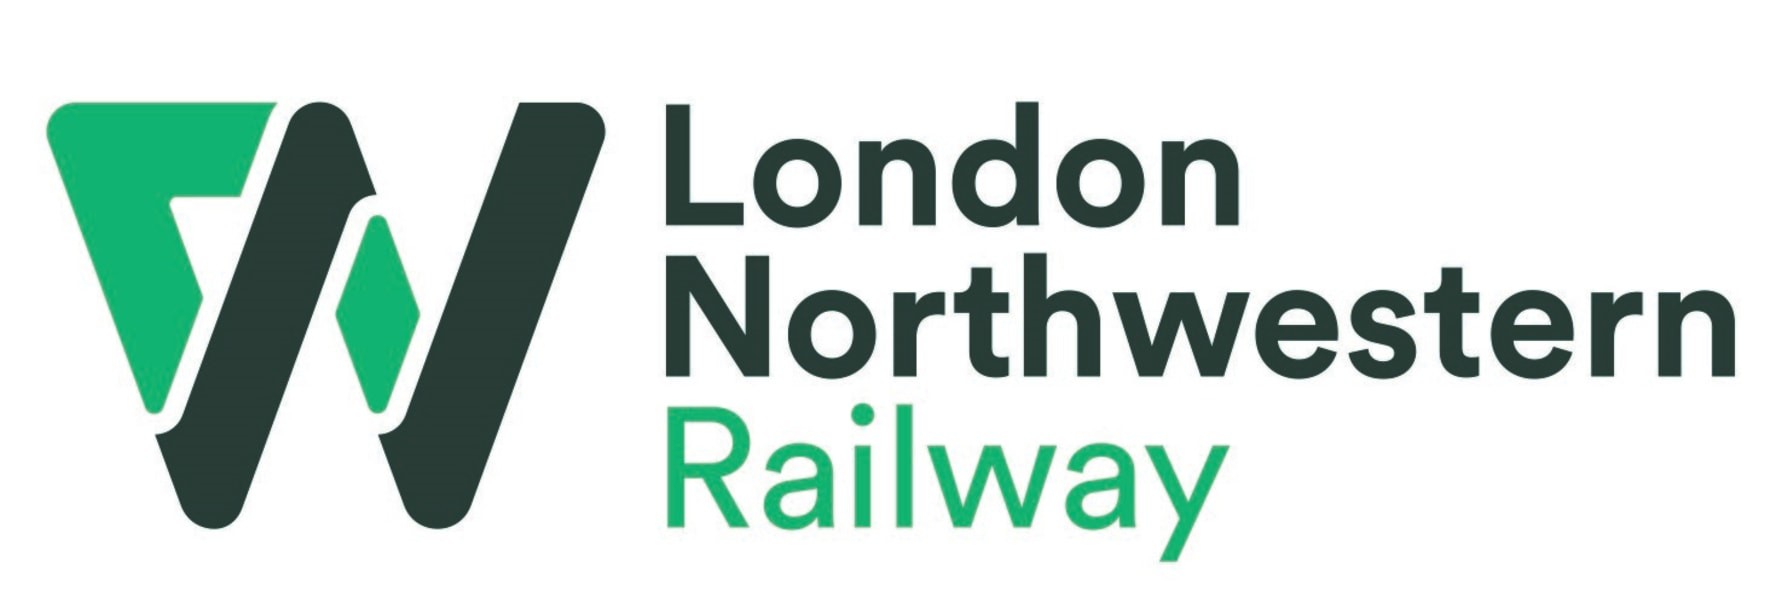 London Northwestern Railway announces online ticket sale as improvement plan launches